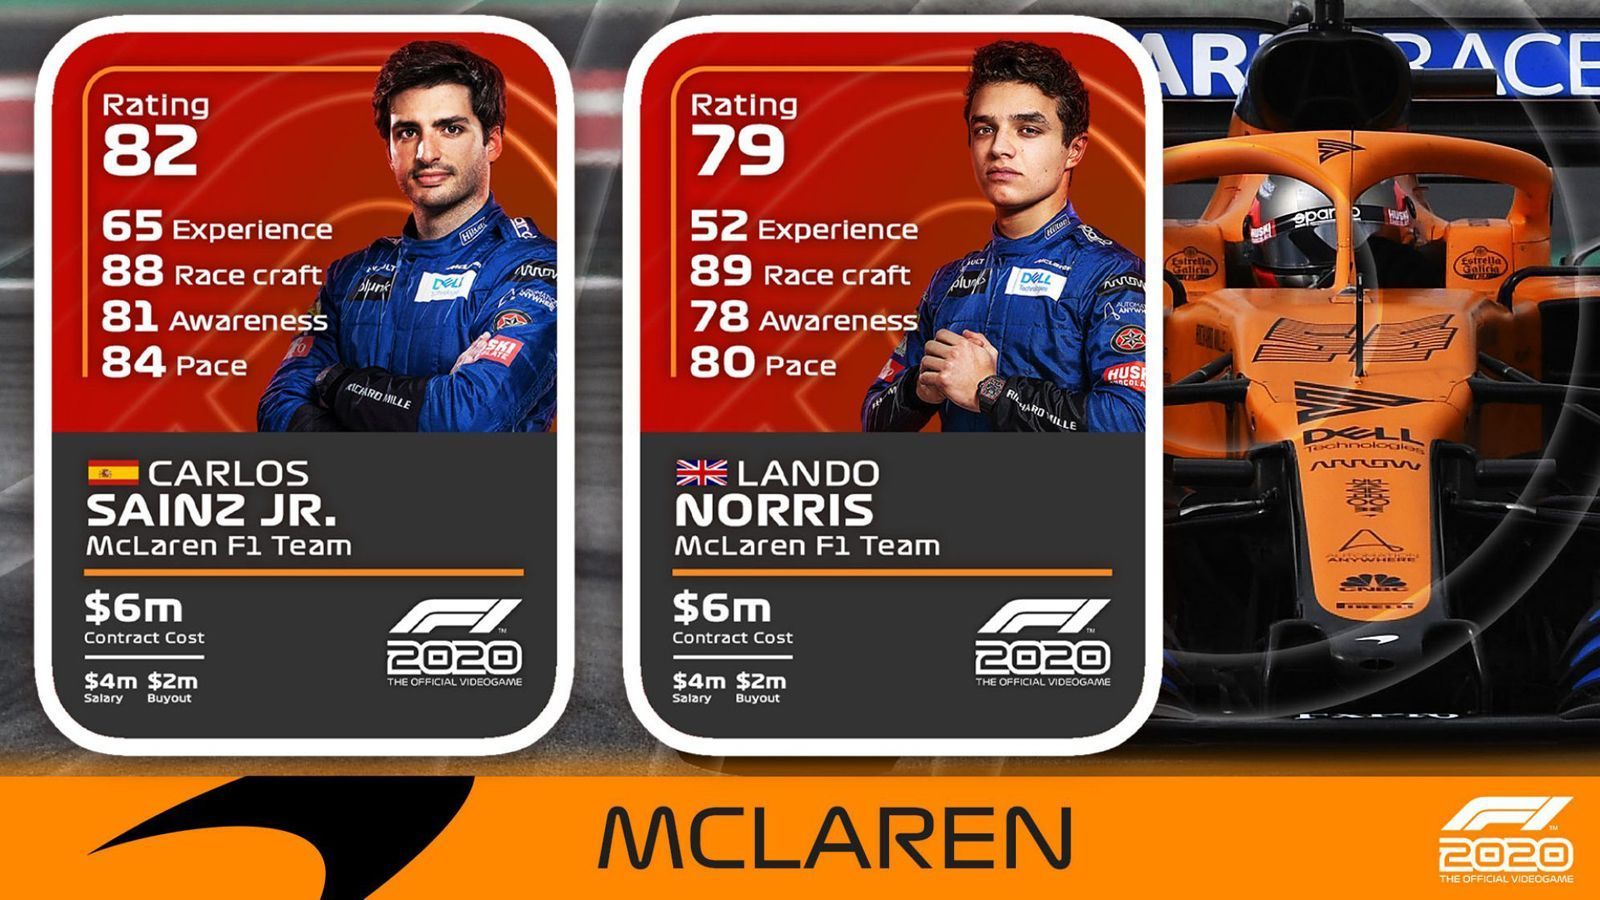 
                <strong>McLaren</strong><br>
                Carlos Sainz: Erfahrung 65, Fahrkunst 88, Bewusstsein 81, Pace 84, Overall Rating 82Lando Norris: Erfahrung 52, Fahrkunst 89, Bewusstsein 78, Pace 80, Overall Rating 79
              